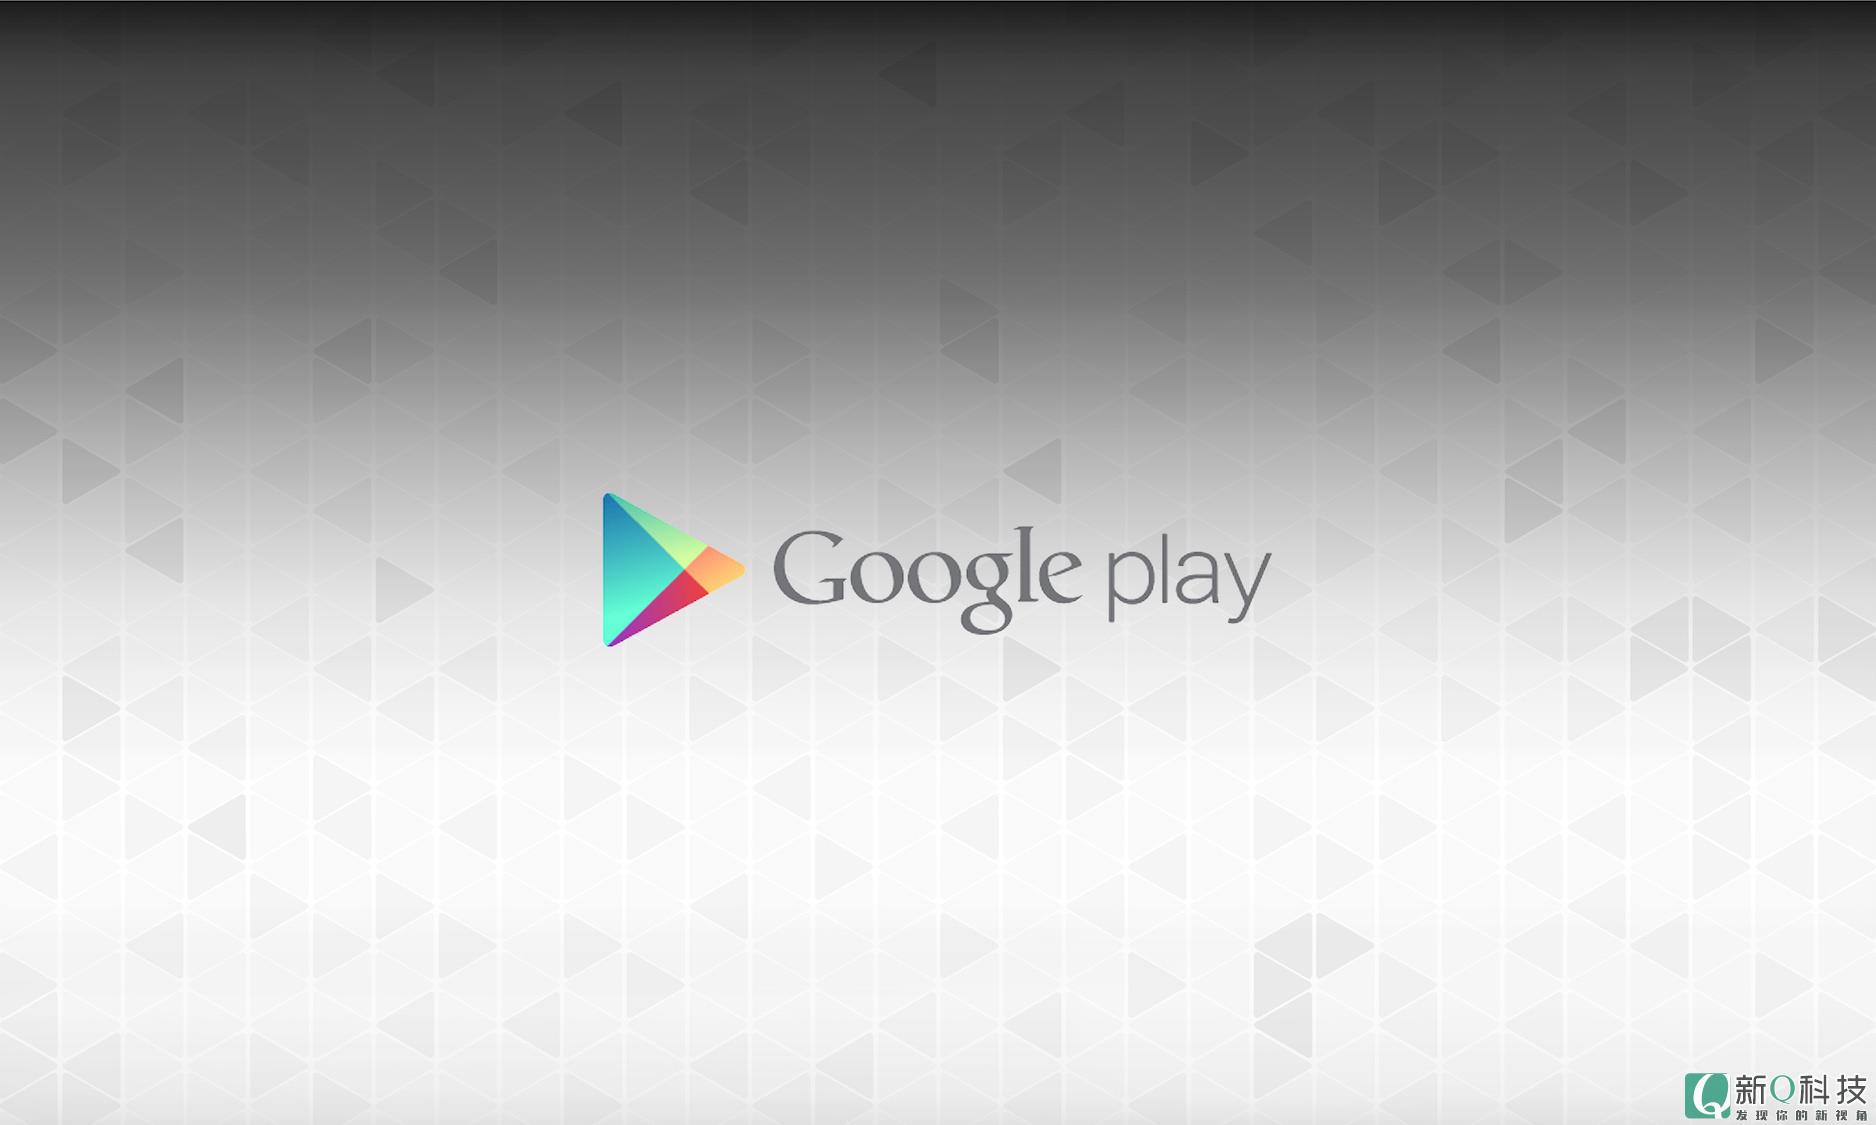 Google Play.jpg